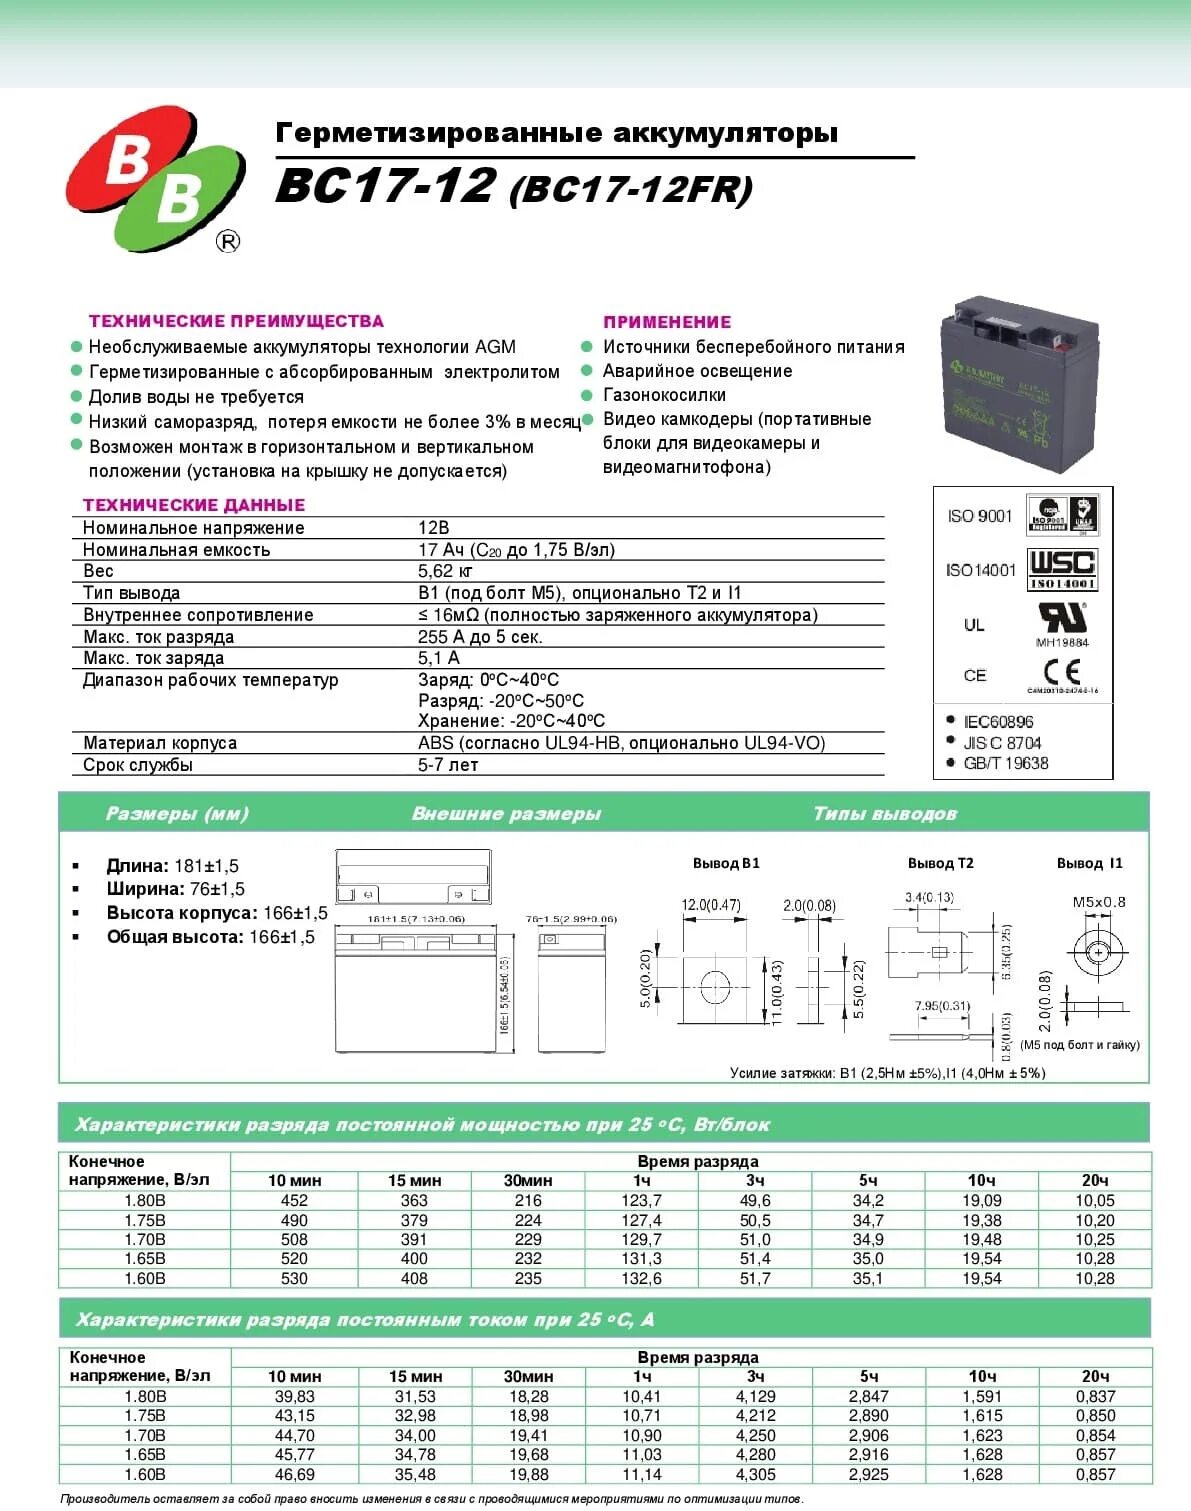 B b battery 12 12. Аккумуляторная батарея BB Battery bc12-12. Аккумуляторная батарея BC 17-12. Батарея аккумуляторная BB Battery bc17-12 напряжение 12в. Bc17.